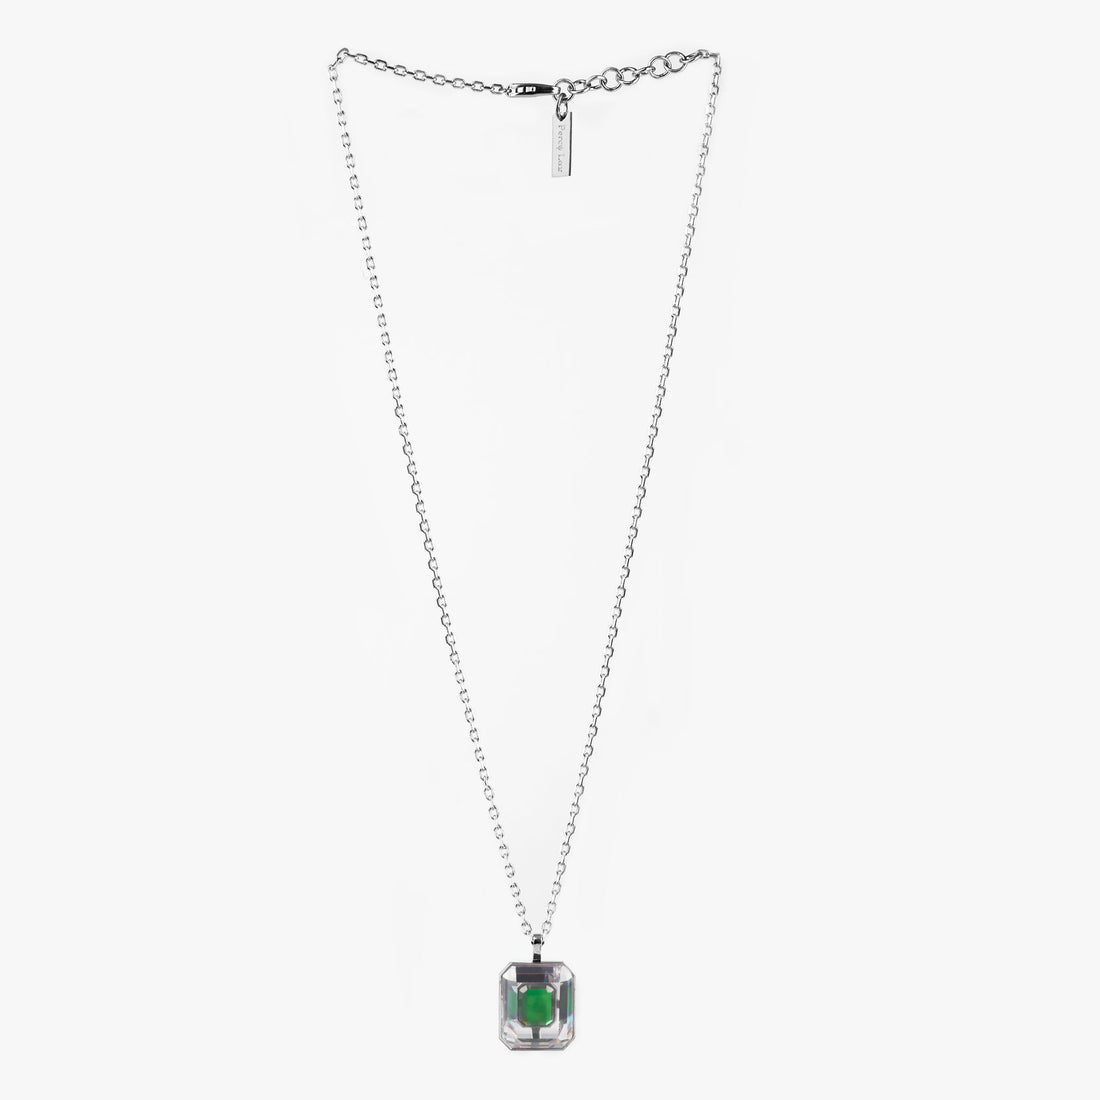 Percy Lau / Emerald Cut Pendant Necklace